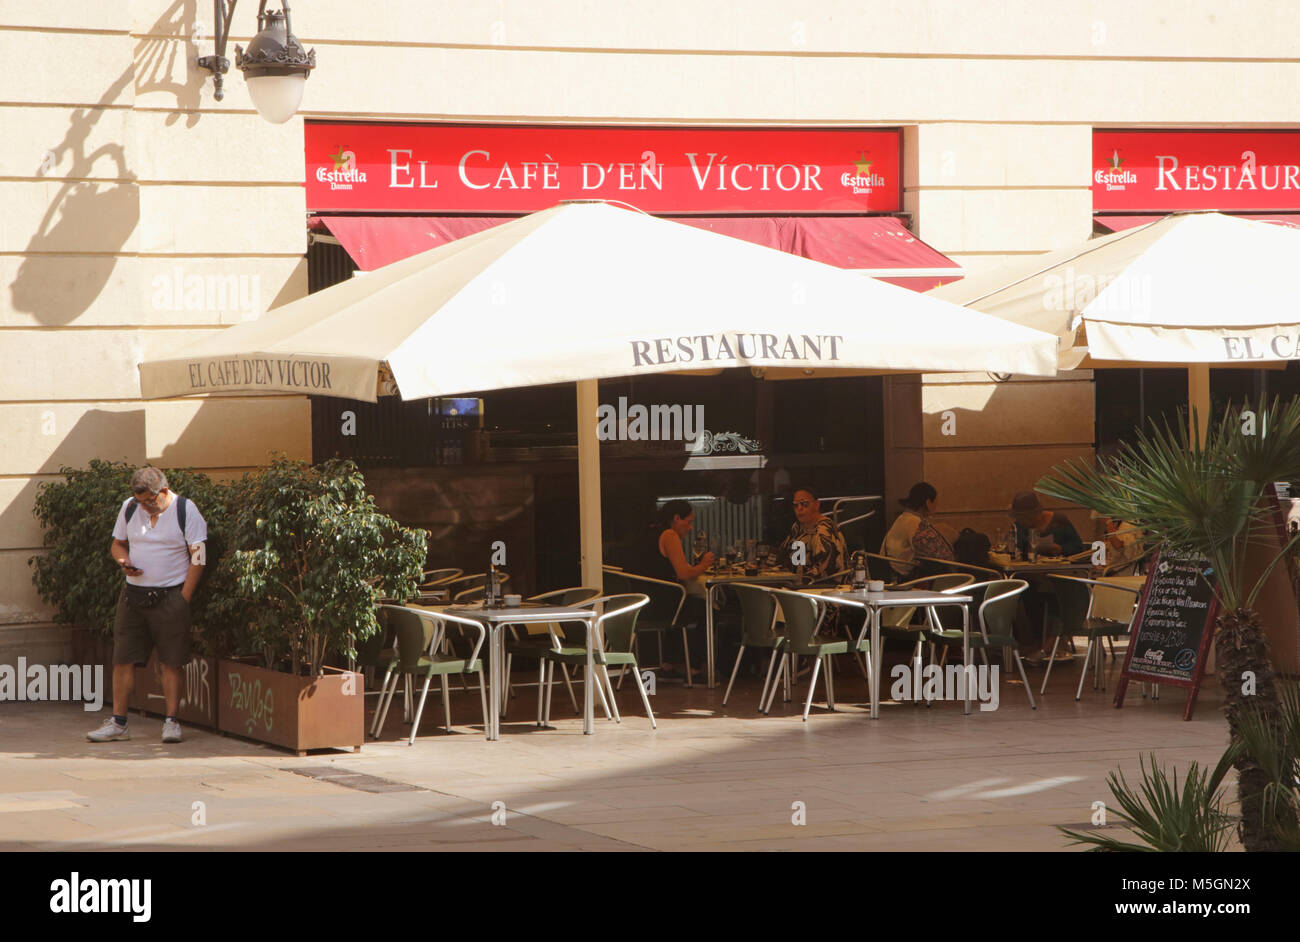 El Cafe D'en Victor Barri Gotic Barcelona Spain Stock Photo